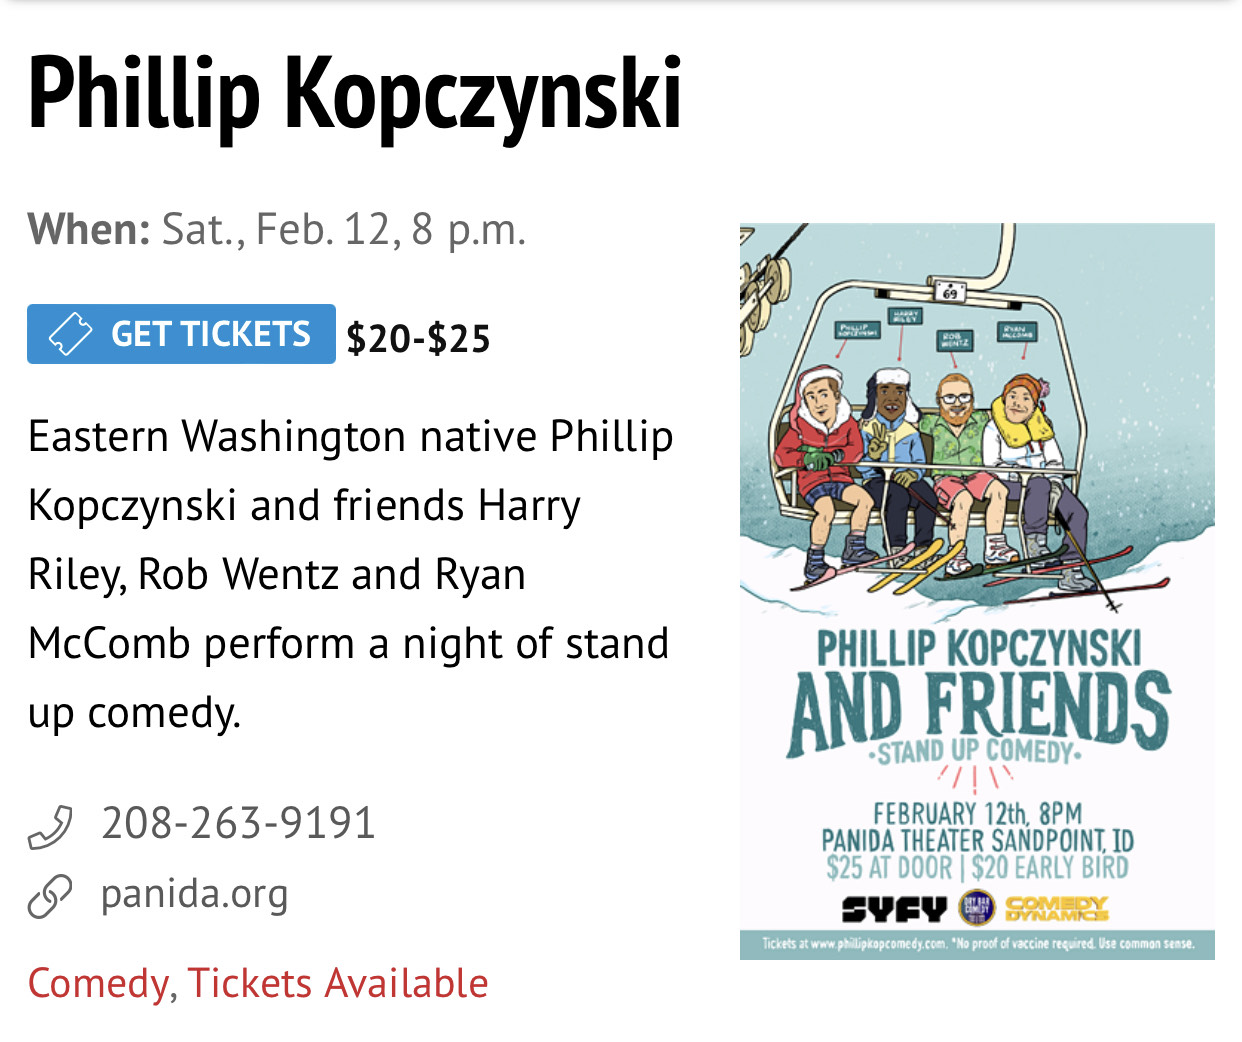 Feb 12 at 8pm Phillip kopczynski $20-$25 panics theatre